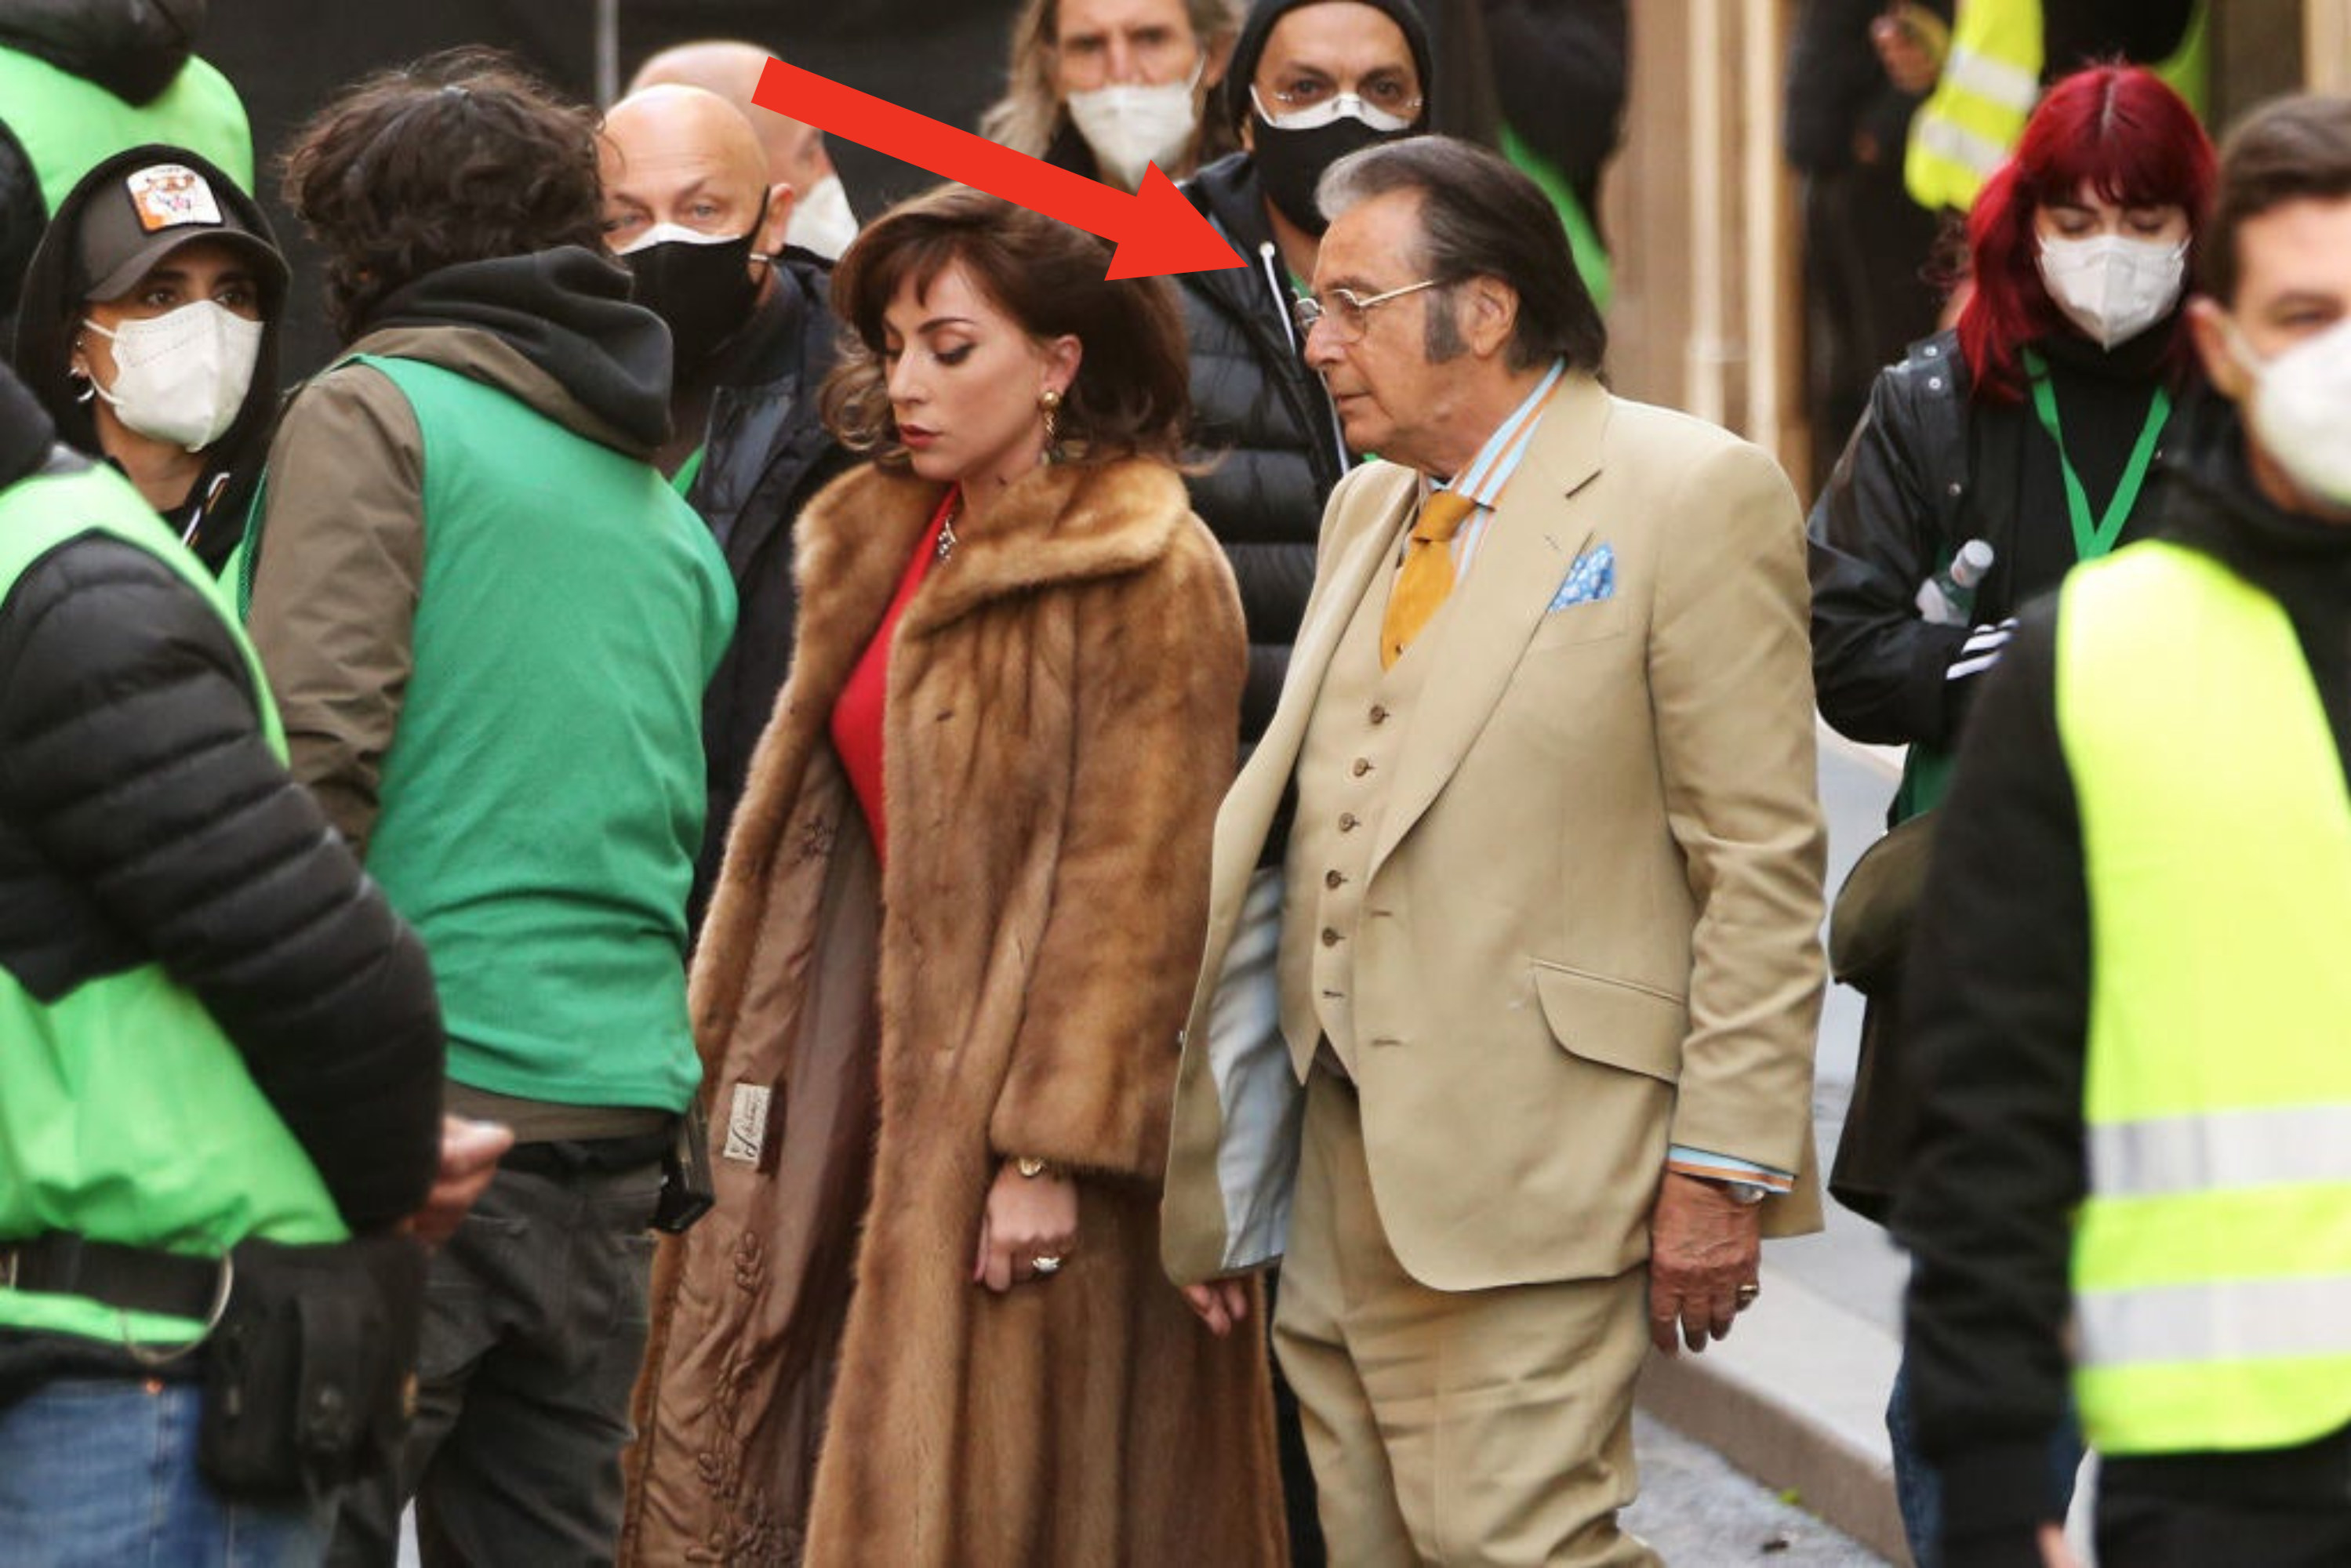 Al Pacino walking with Lady Gaga